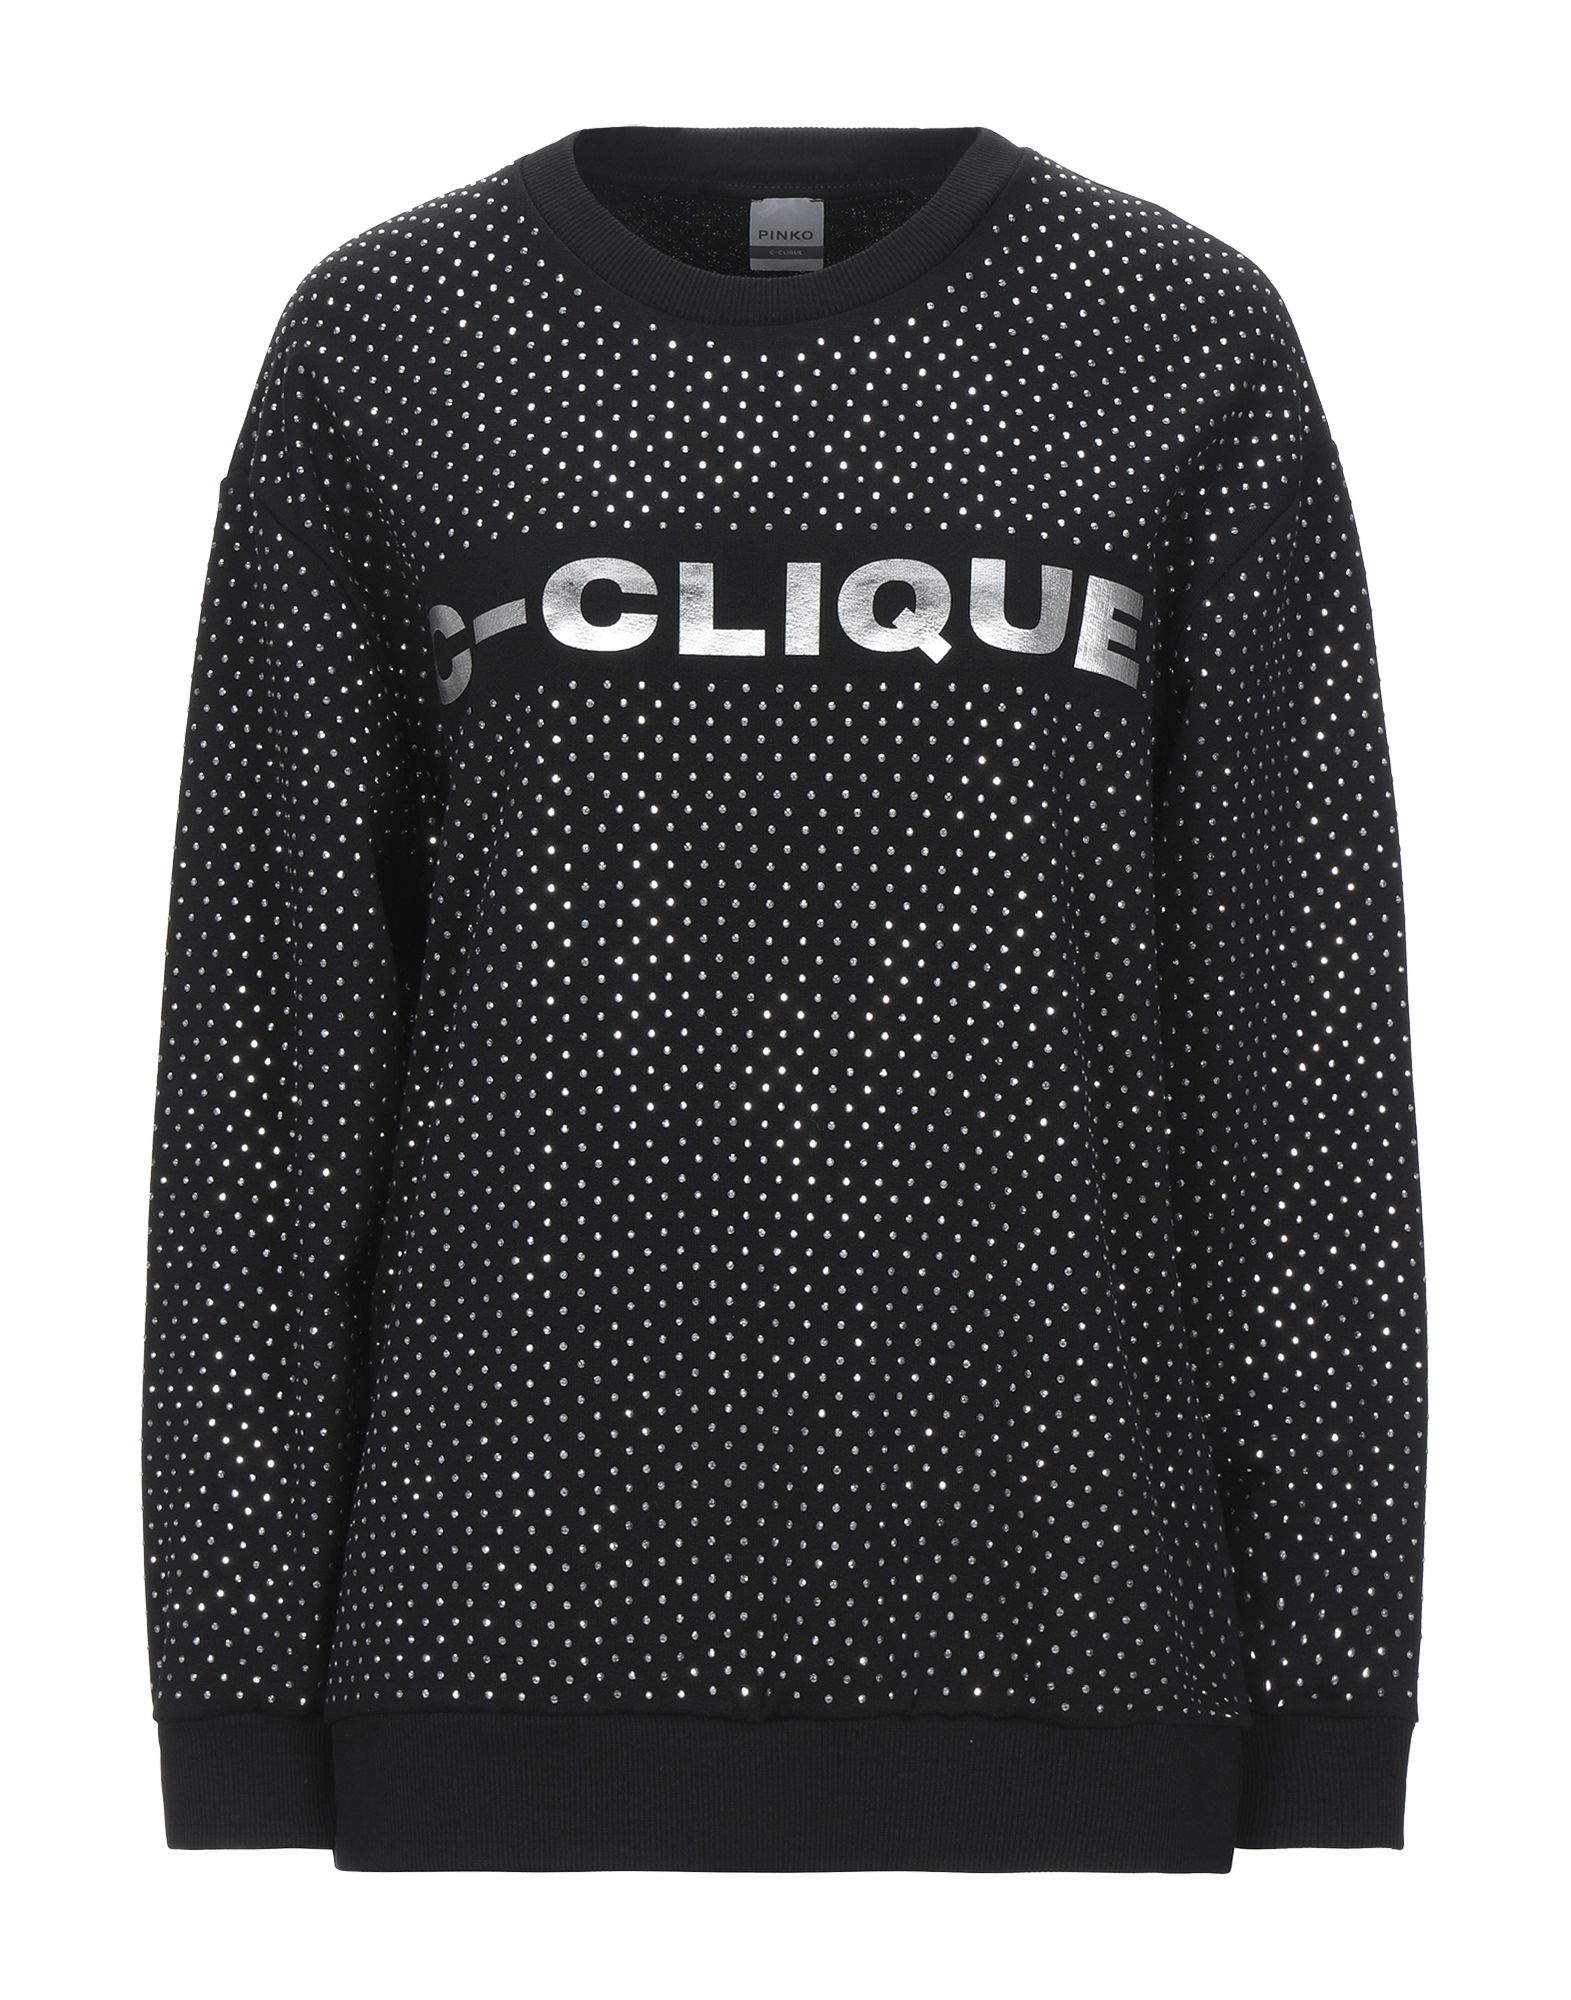 C-CLIQUE Sweatshirt Damen Schwarz von C-CLIQUE